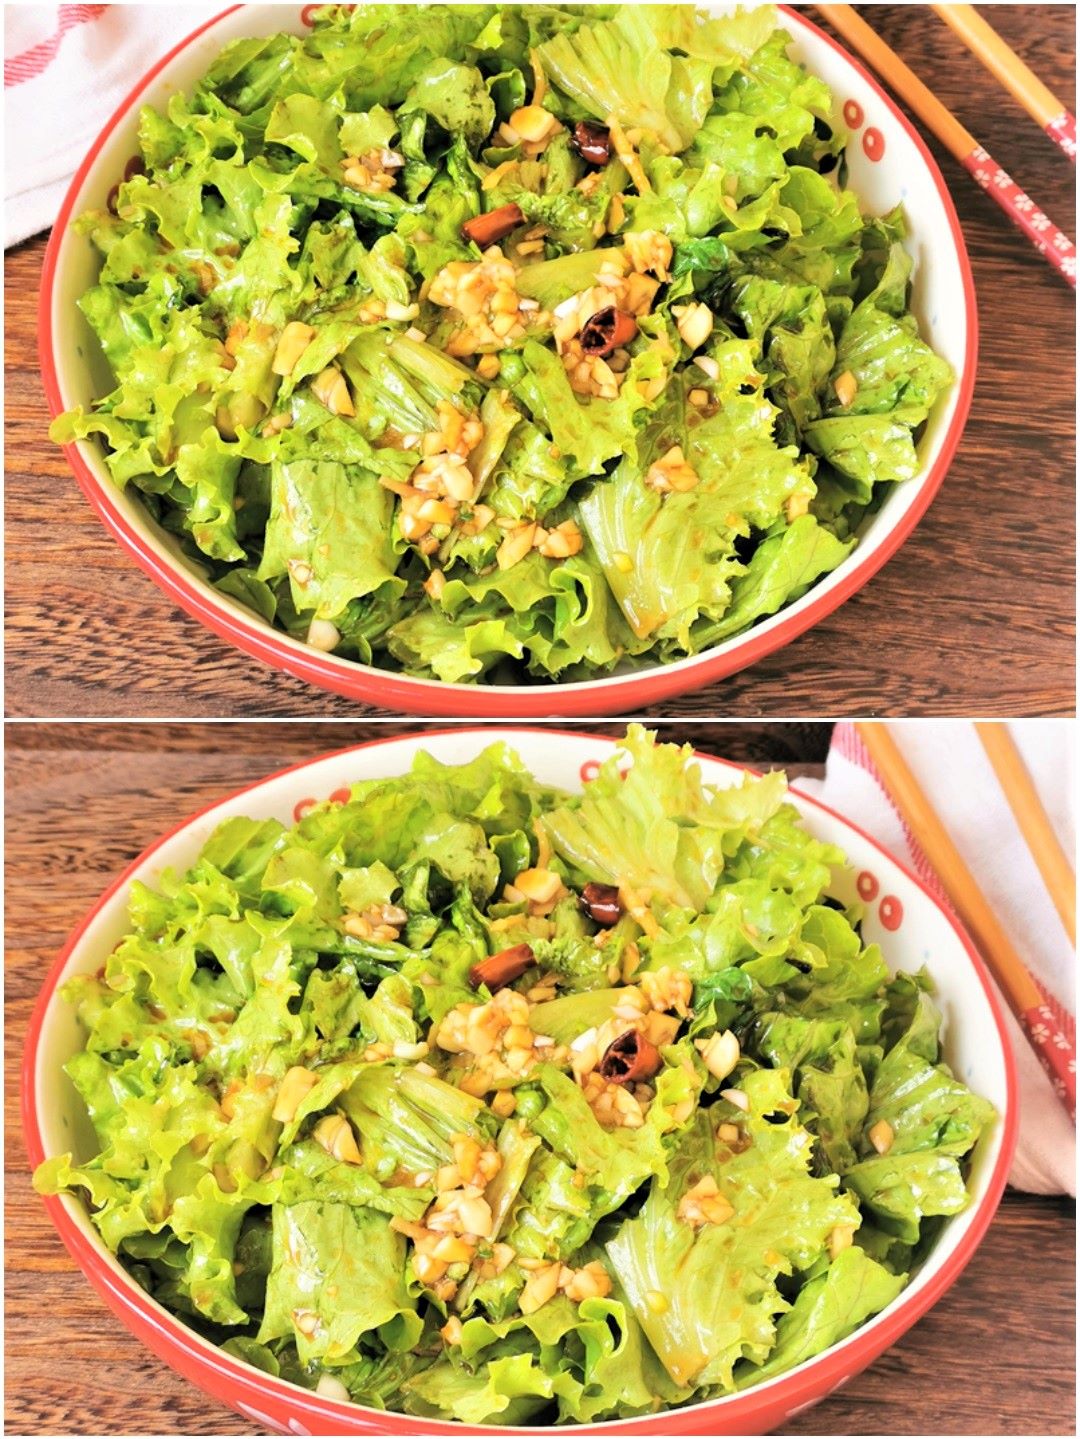 Oily lettuce salad recipe Simple healthy green vegetable salad 2020